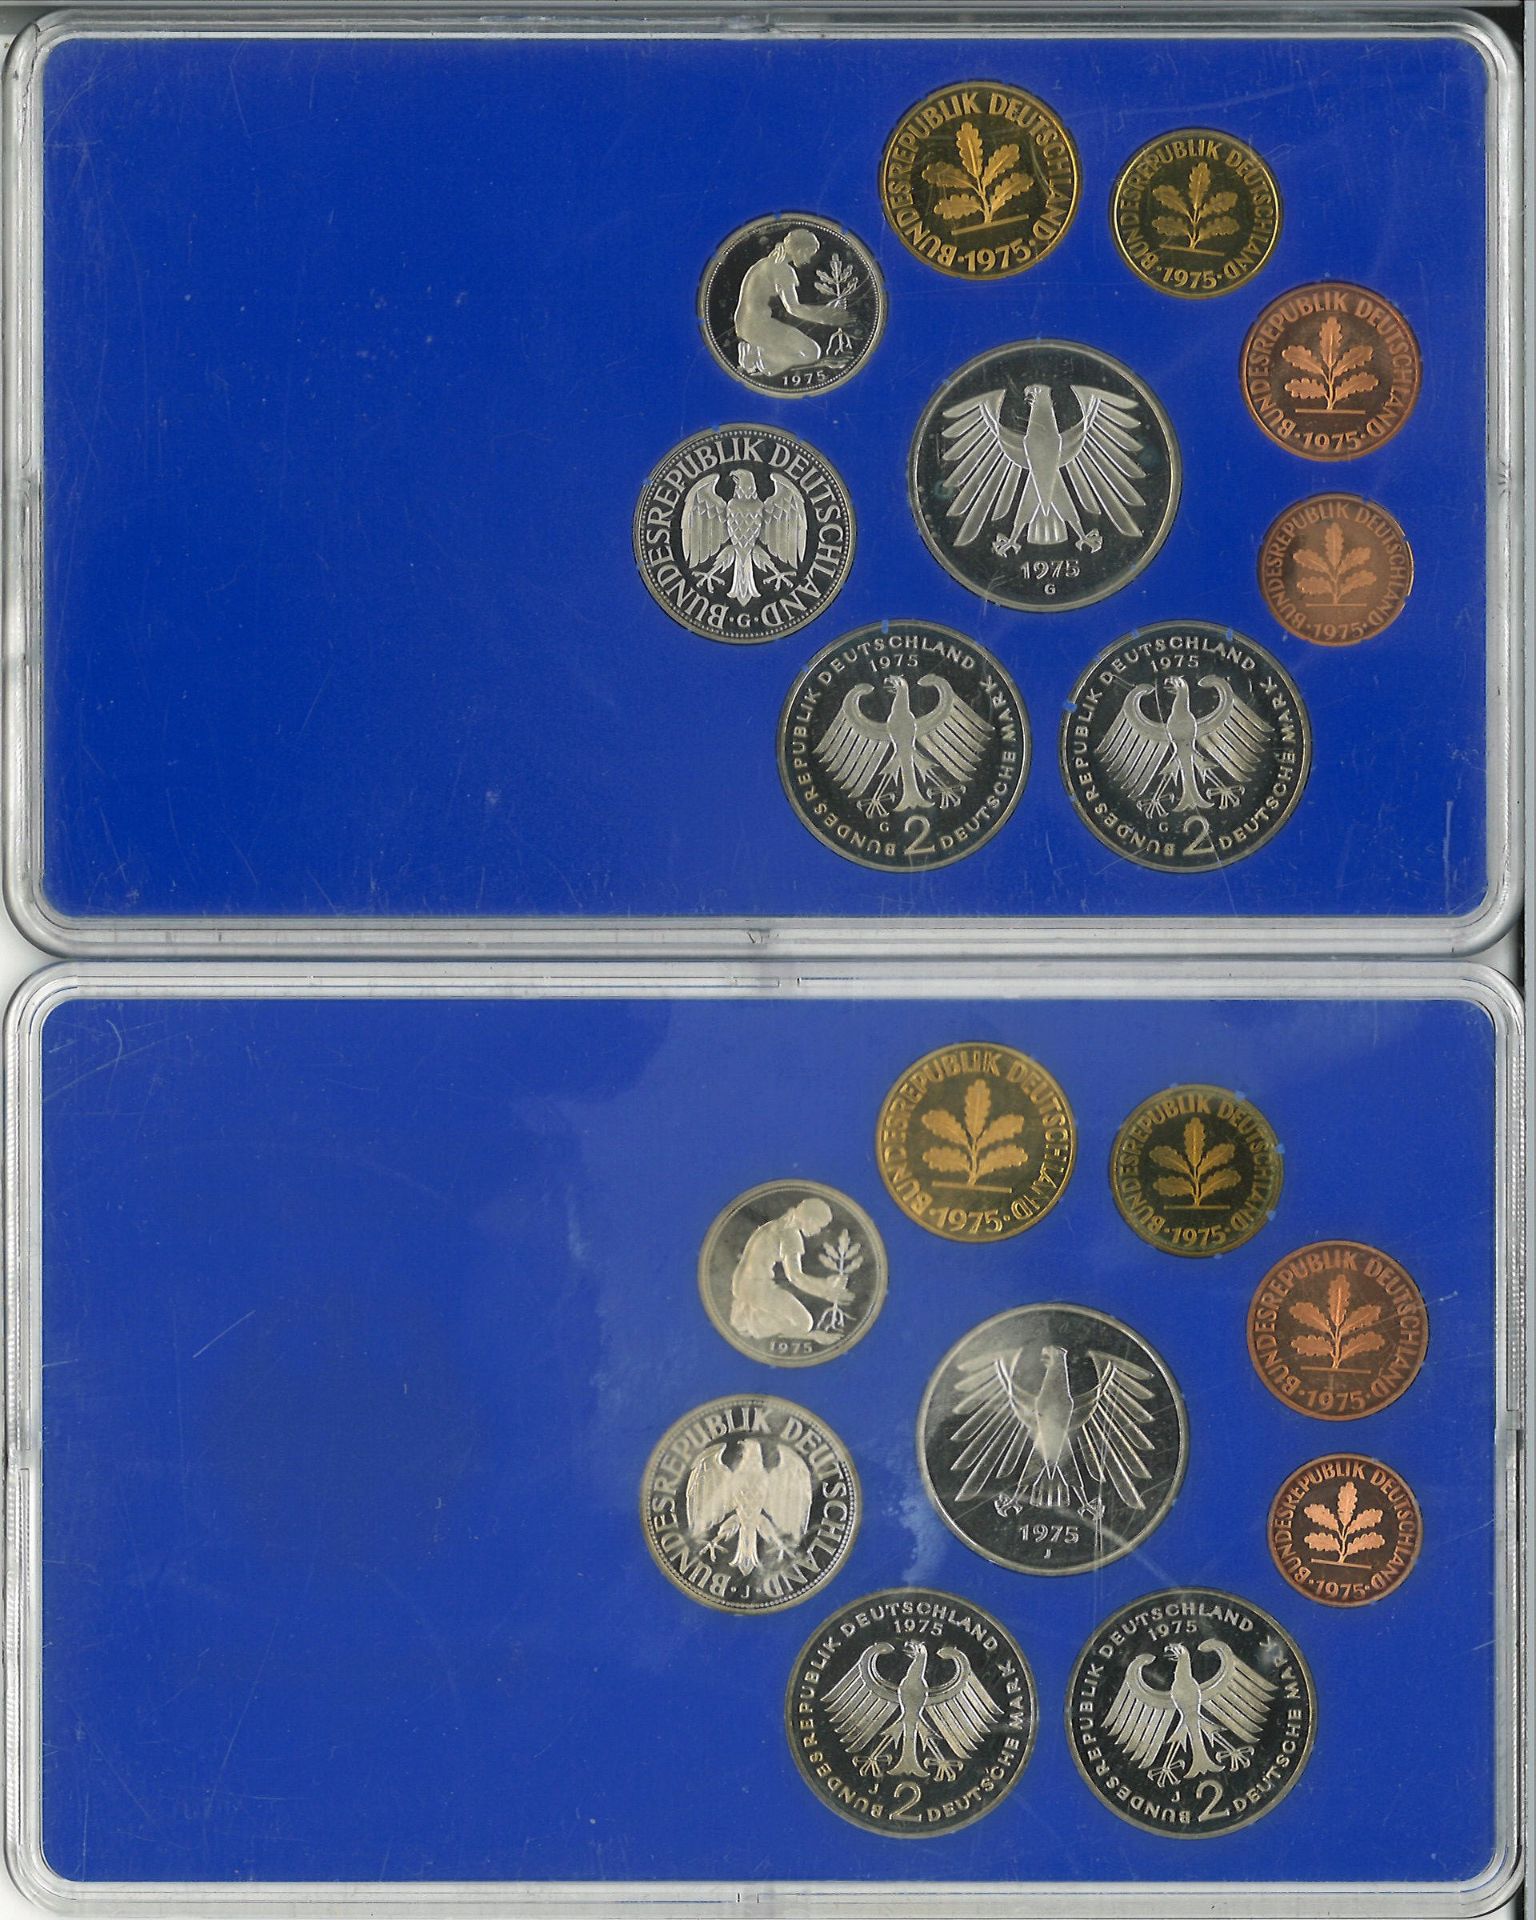 BRD Münzsets Jahrgang 1975, D, F, G und J. Im Original Blister. - Image 3 of 4